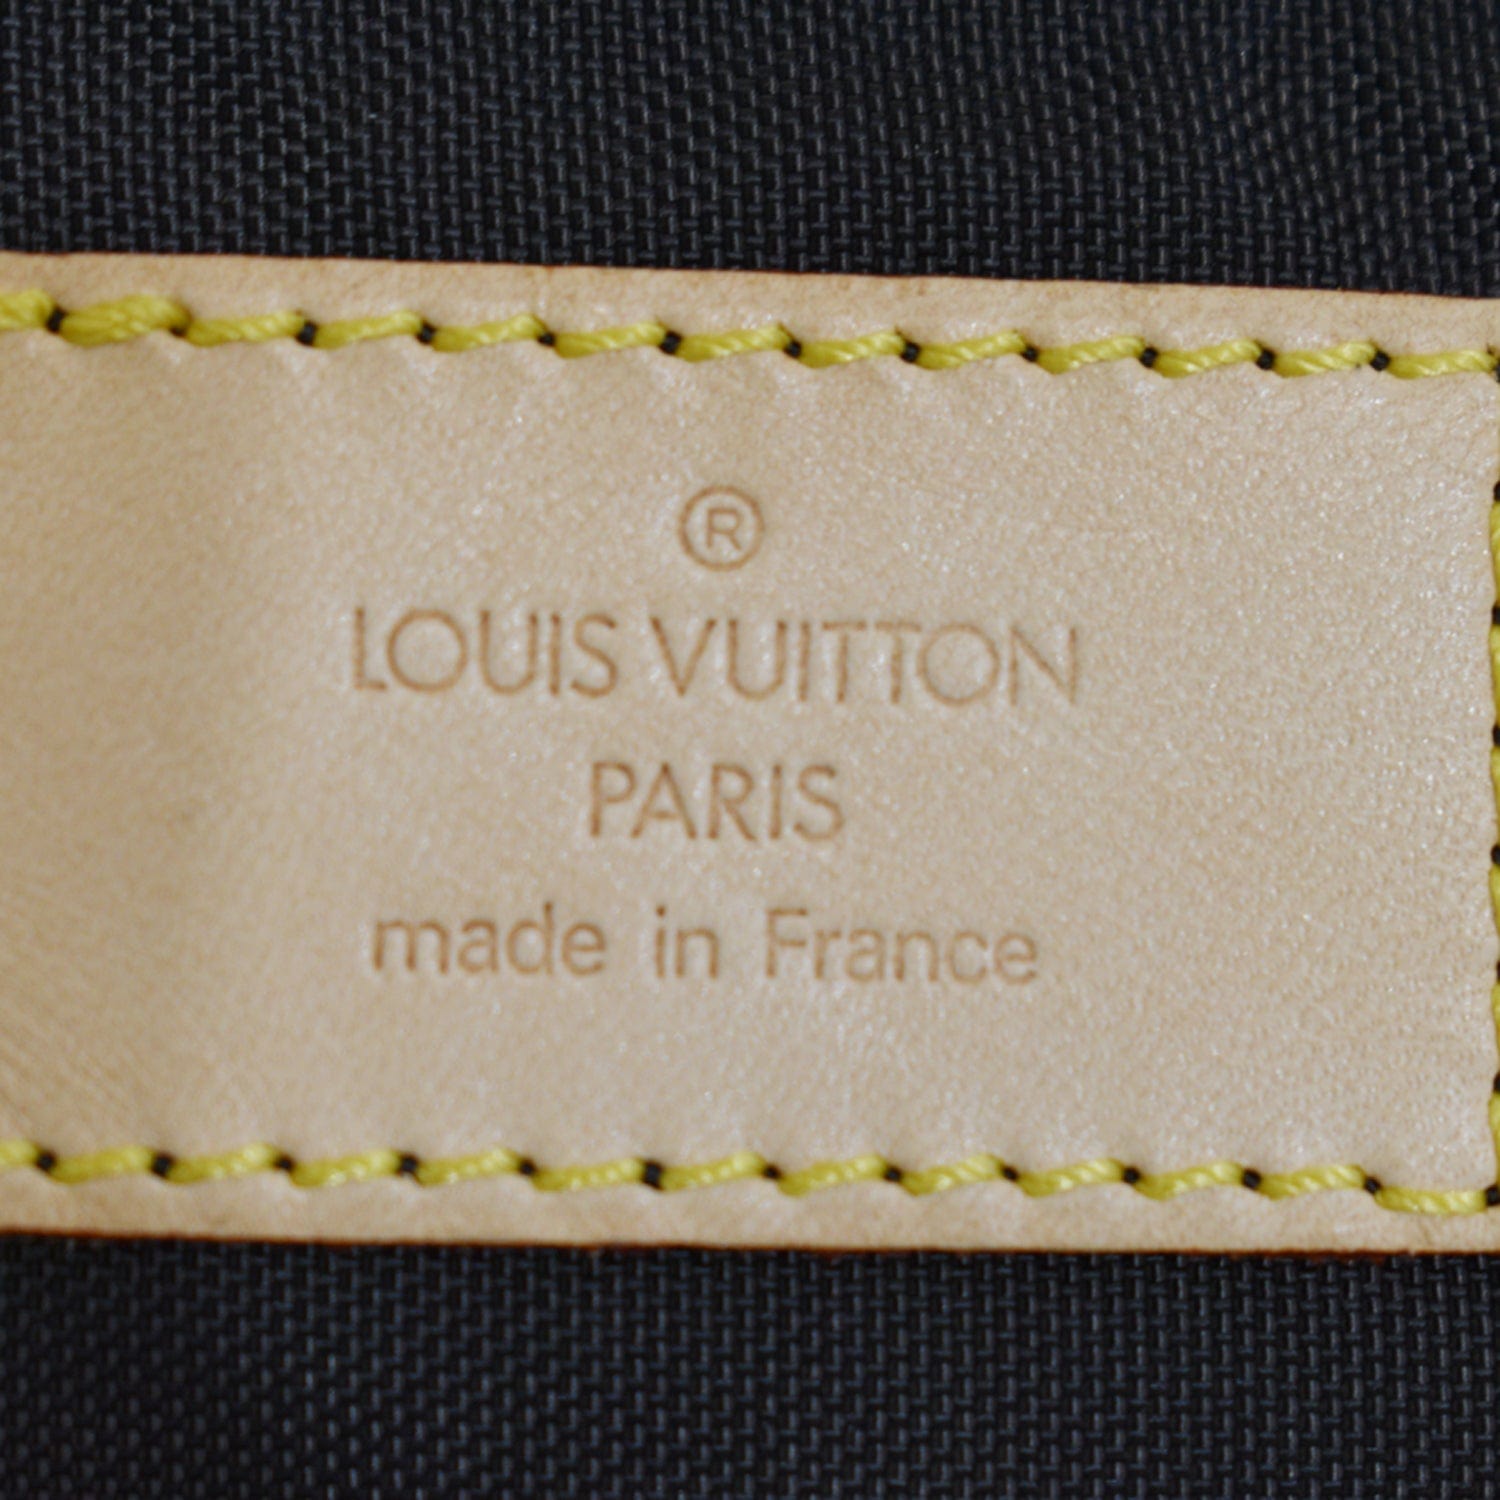 LOUIS VUITTON suit bag, Monogram Canvas , trimming and a…